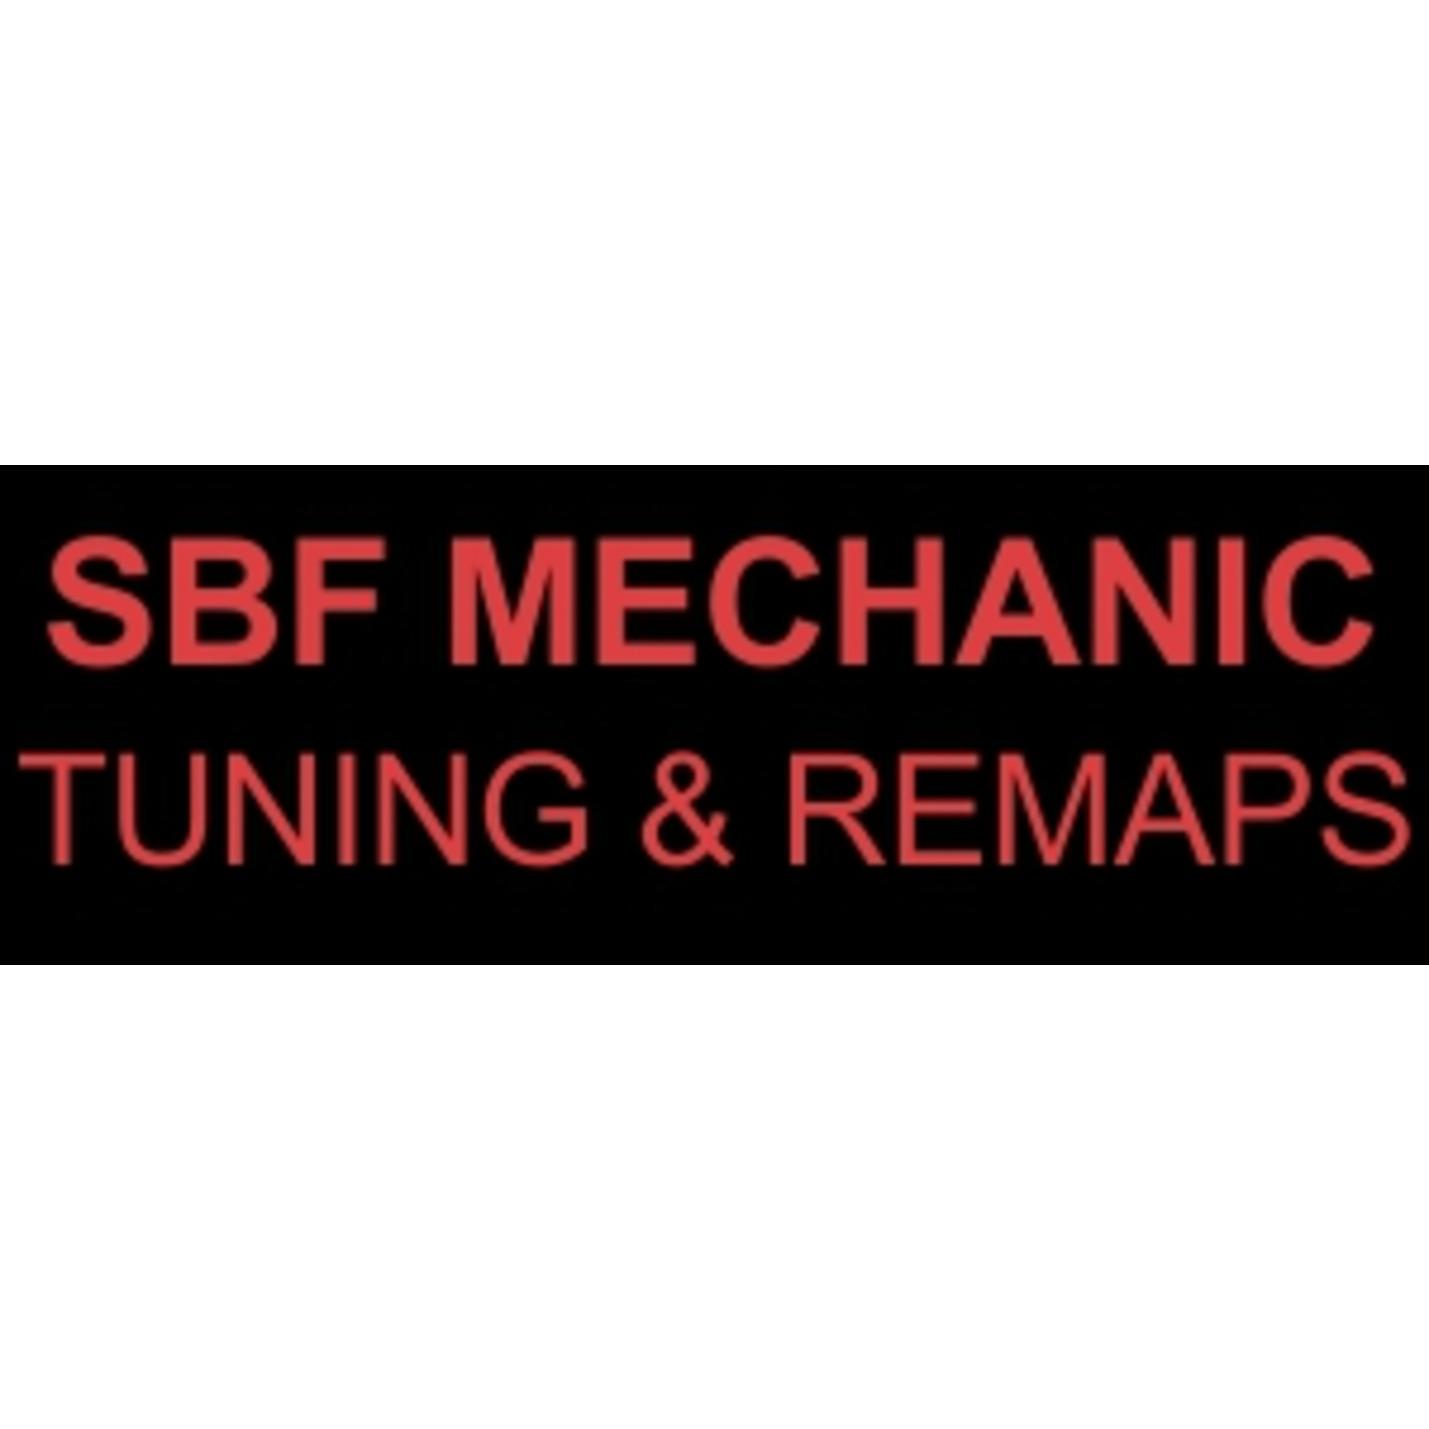 SBF MECHANIC TUNING & REMAPS LTD LOGO SBF MECHANIC TUNING & REMAPS LTD Buxton 01298 938078